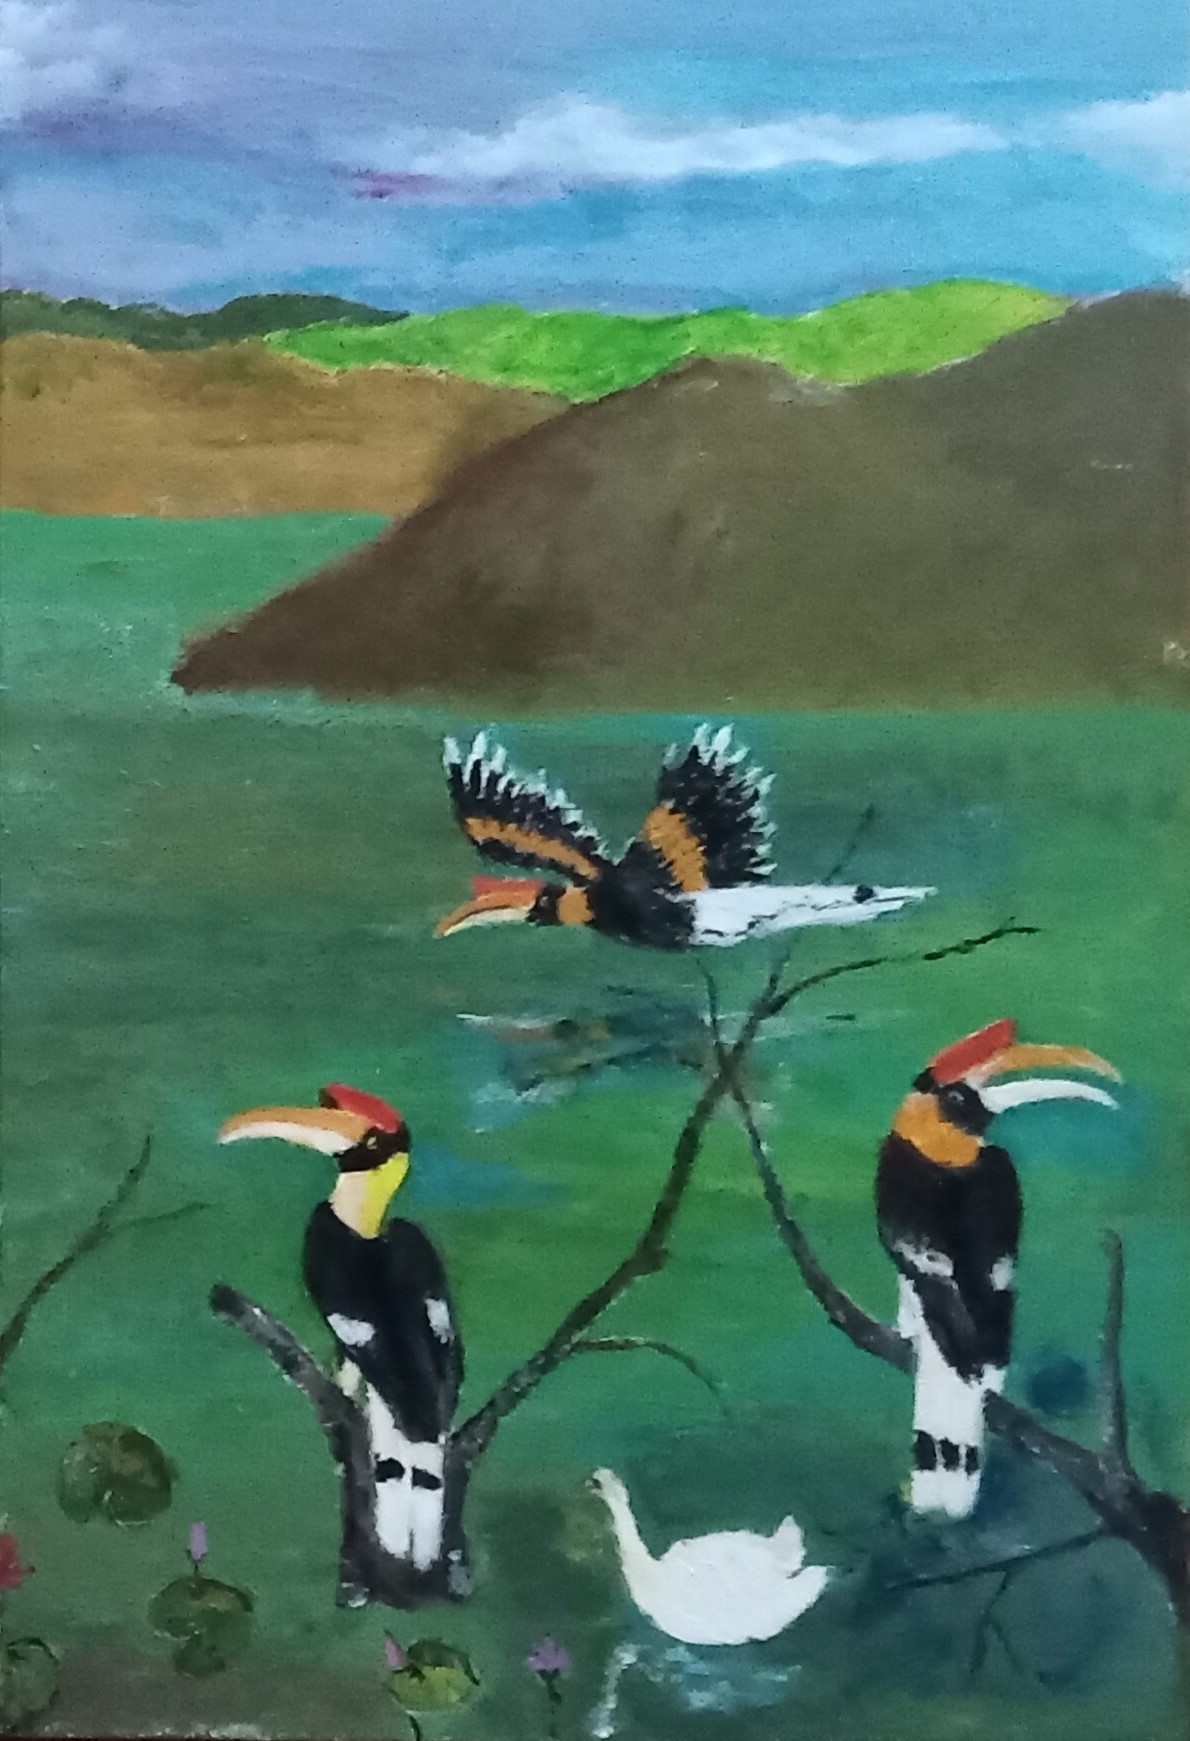 Imaginary Lake/Mountains & Birds by Simpson David